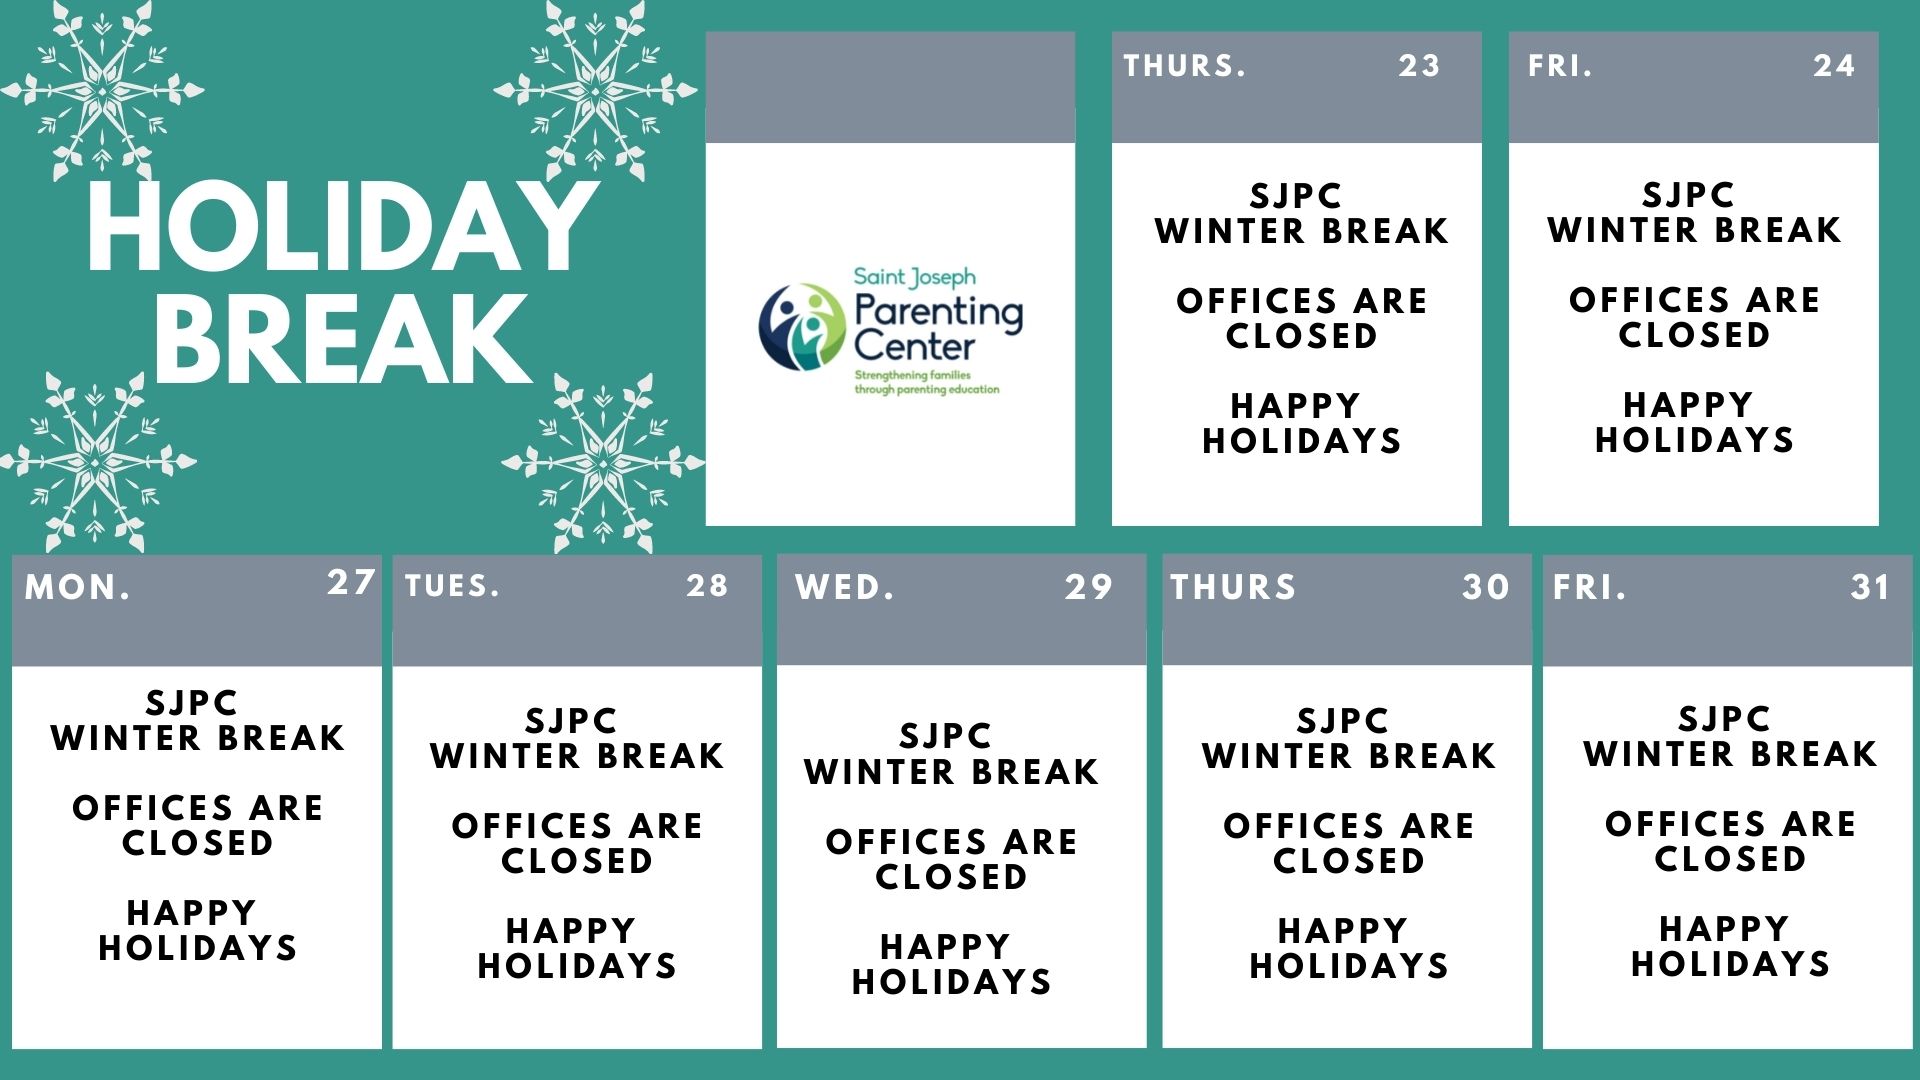 SJPC Holiday Break – Offices Closed